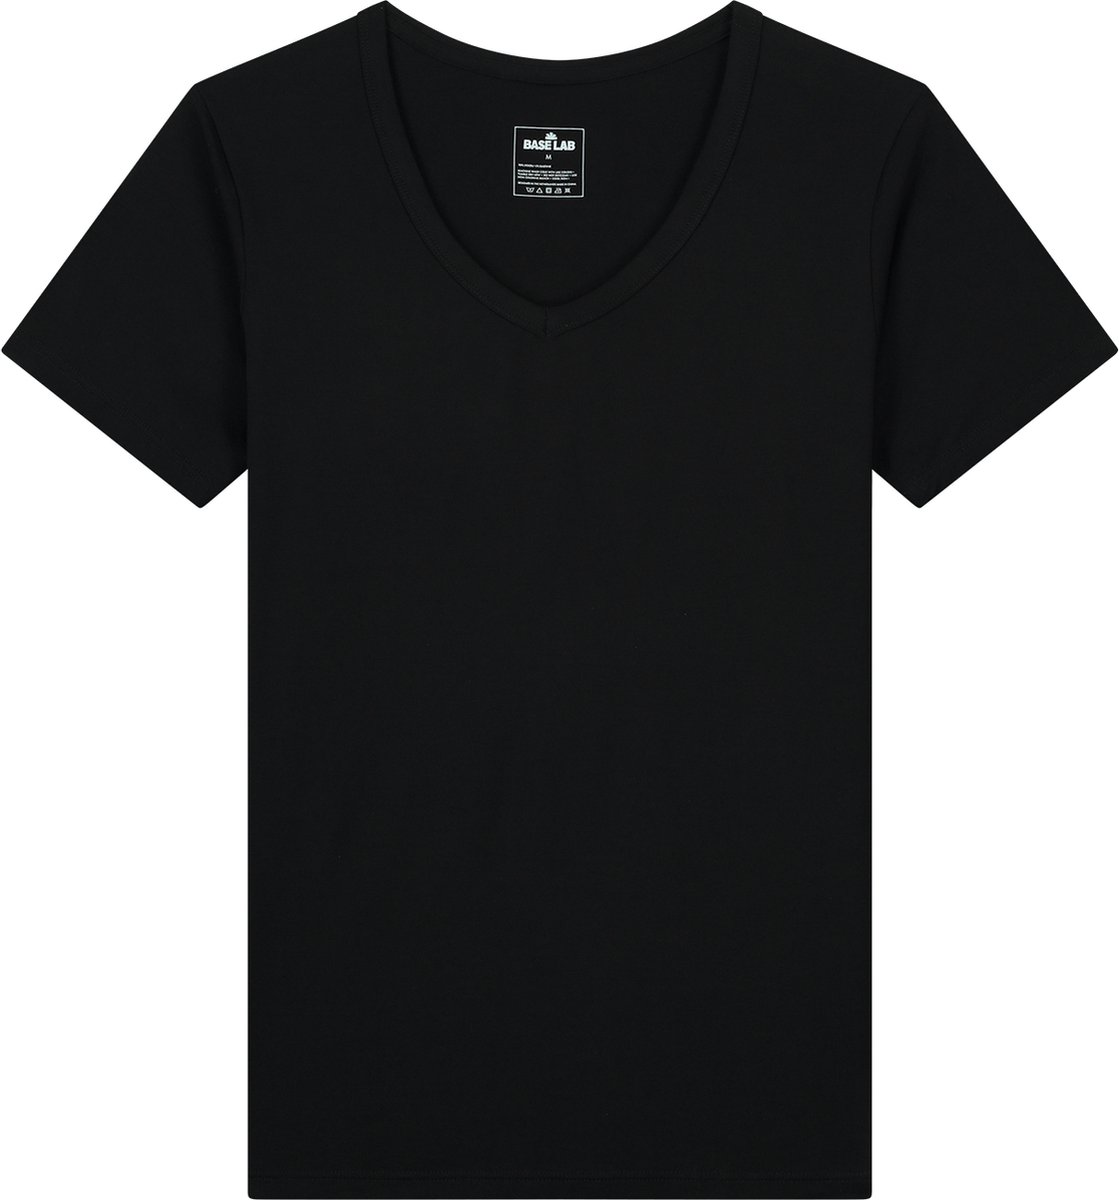 Baselab - Ondershirt - Zwart - Maat S